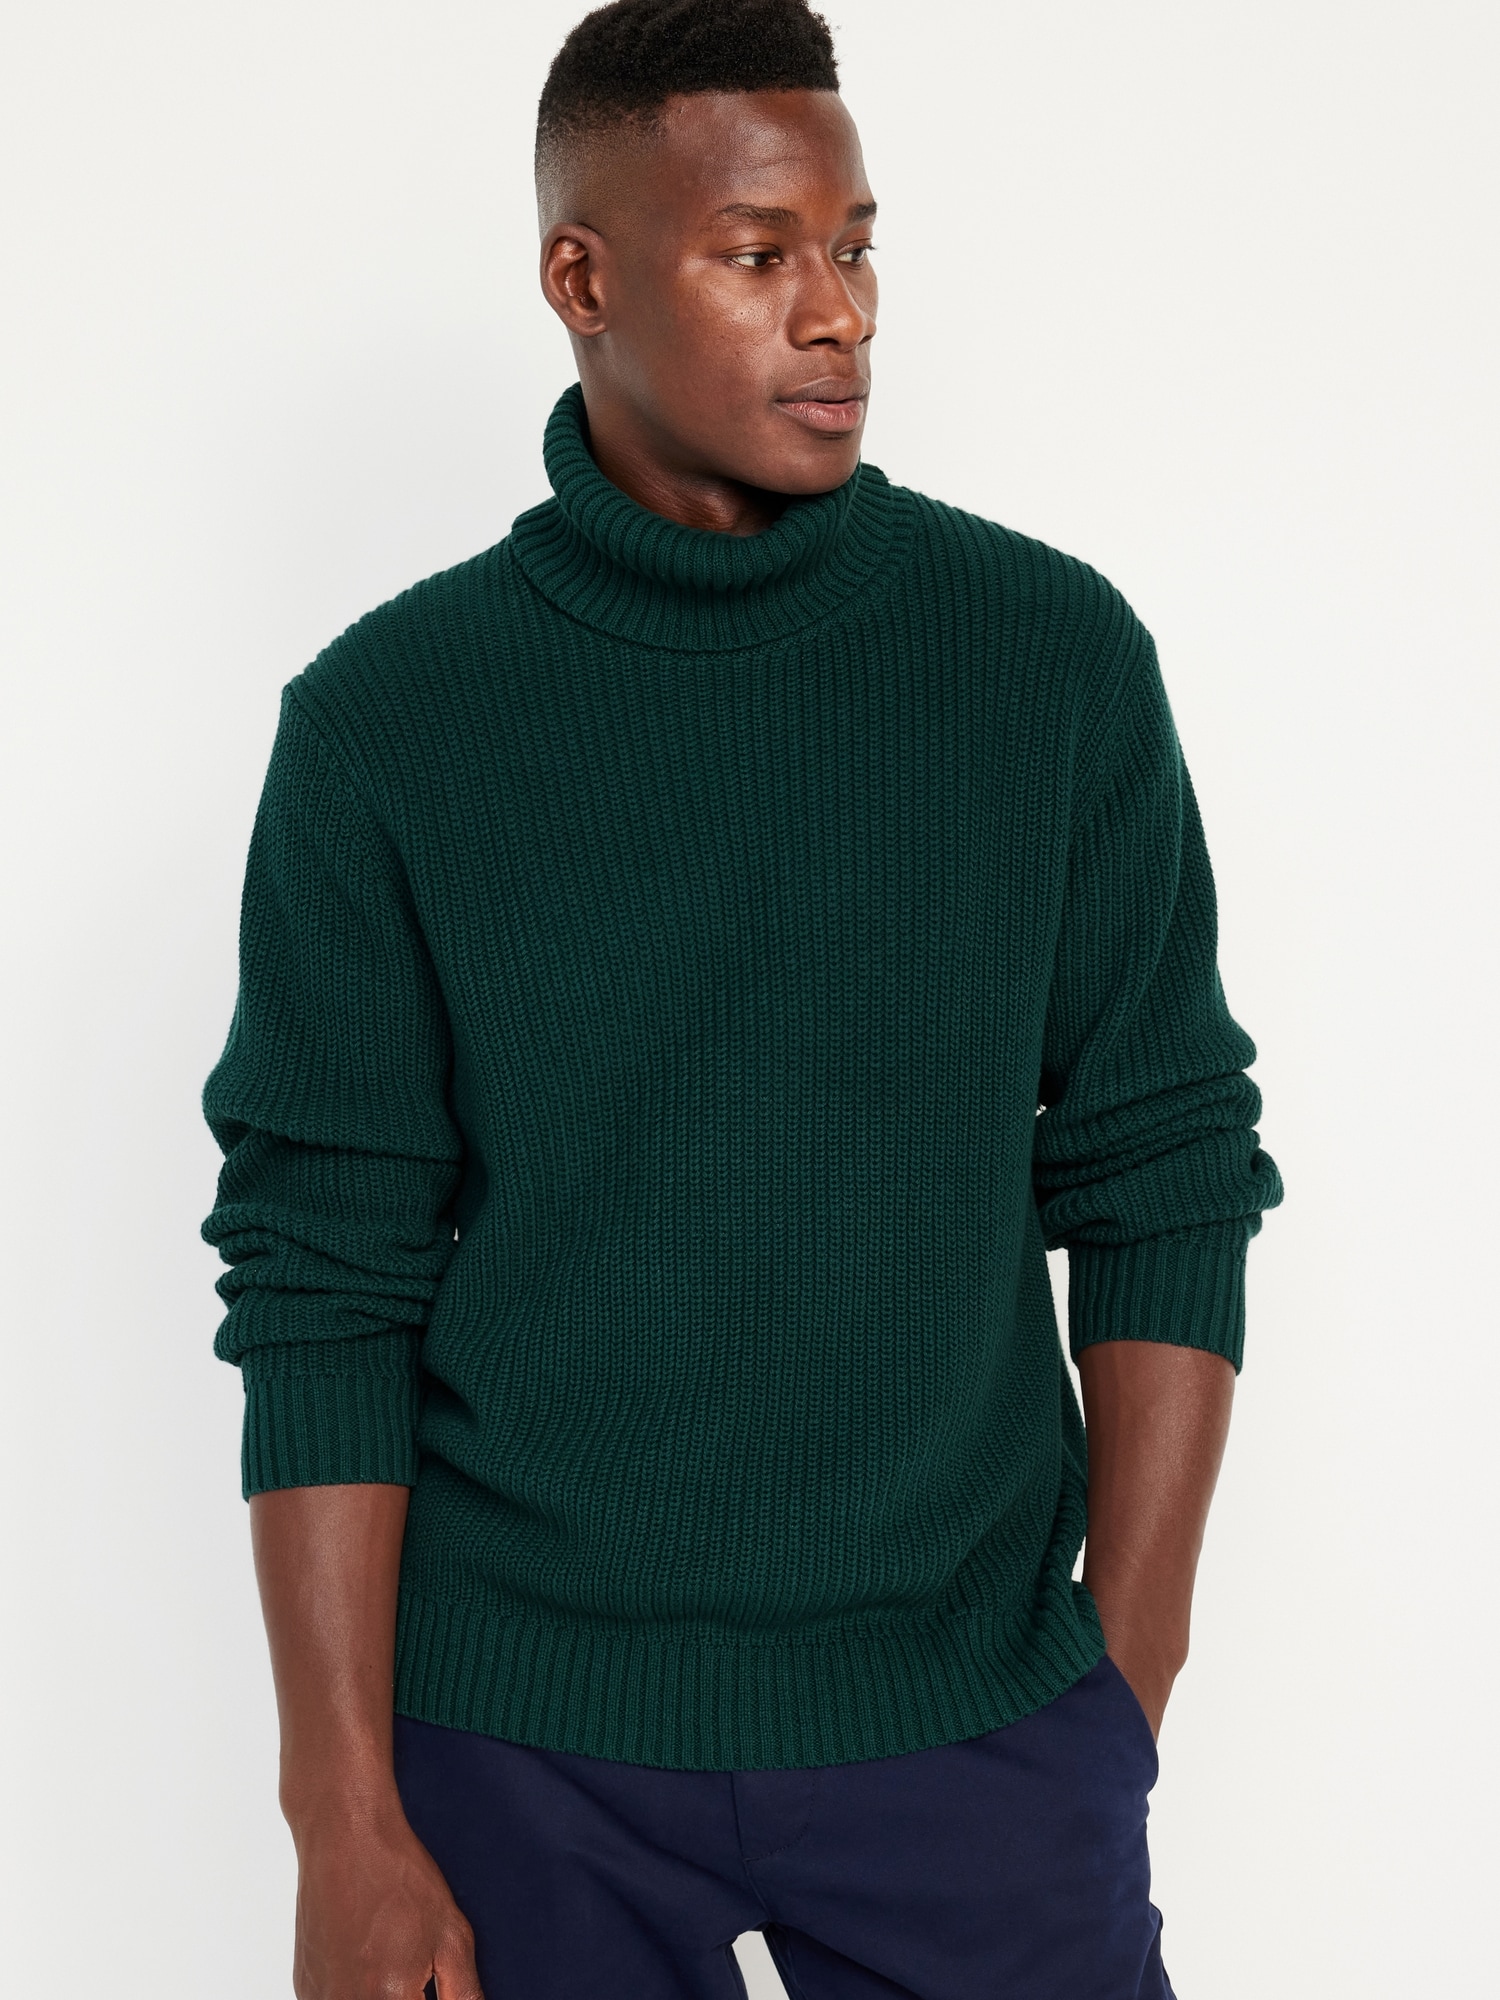 Shaker-Stitch Turtleneck Sweater for Men